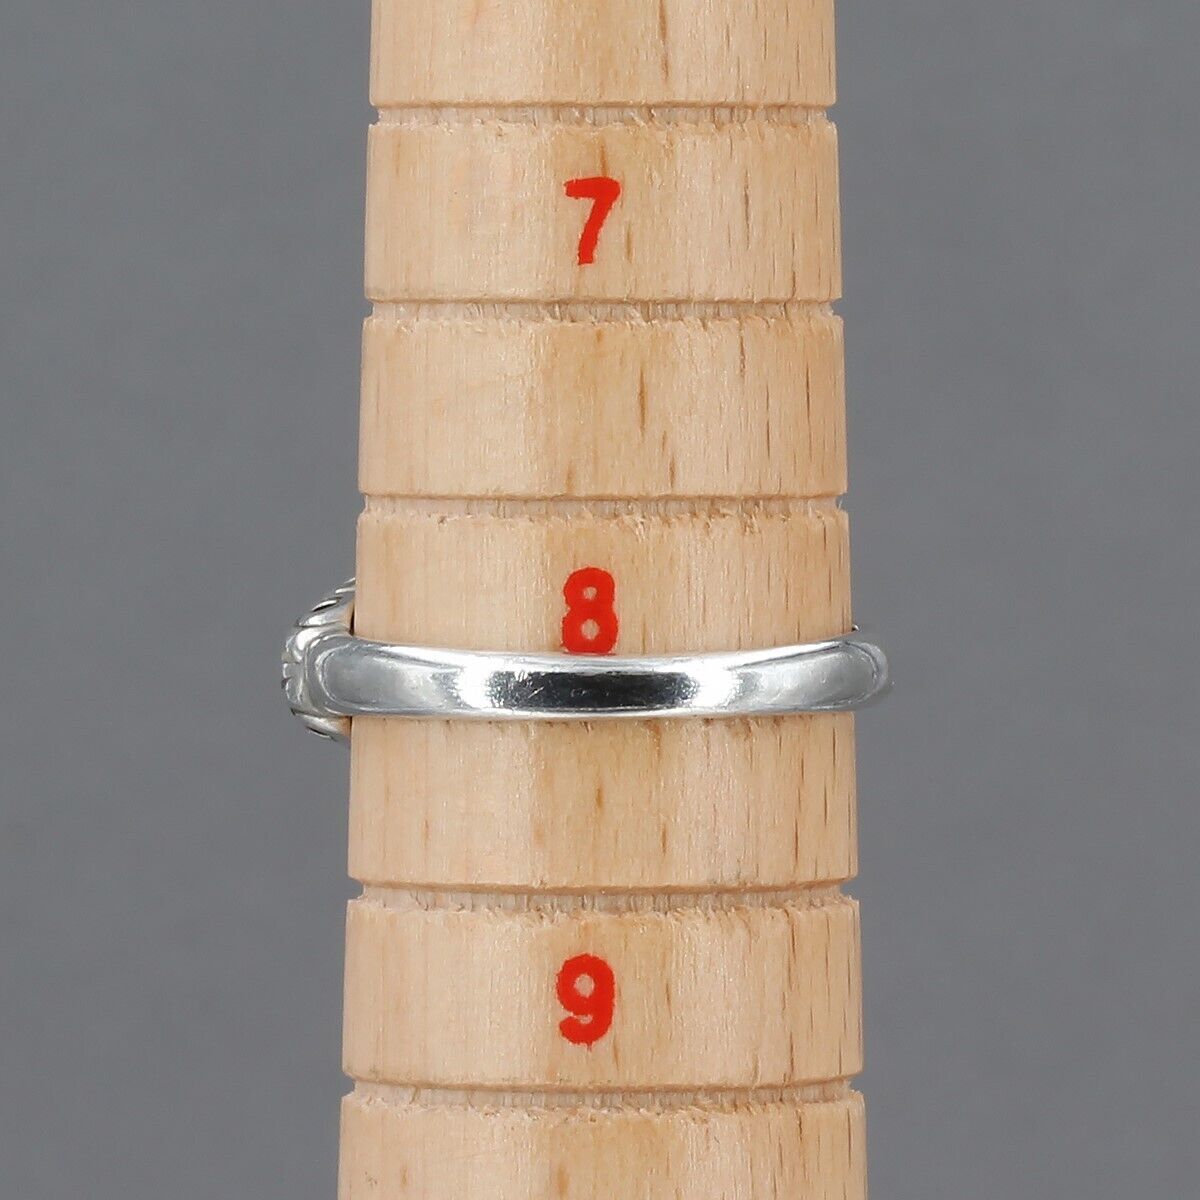 Shube's Dakota West Sterling Silver Filigree Turquoise Cabochon Ring Size 8